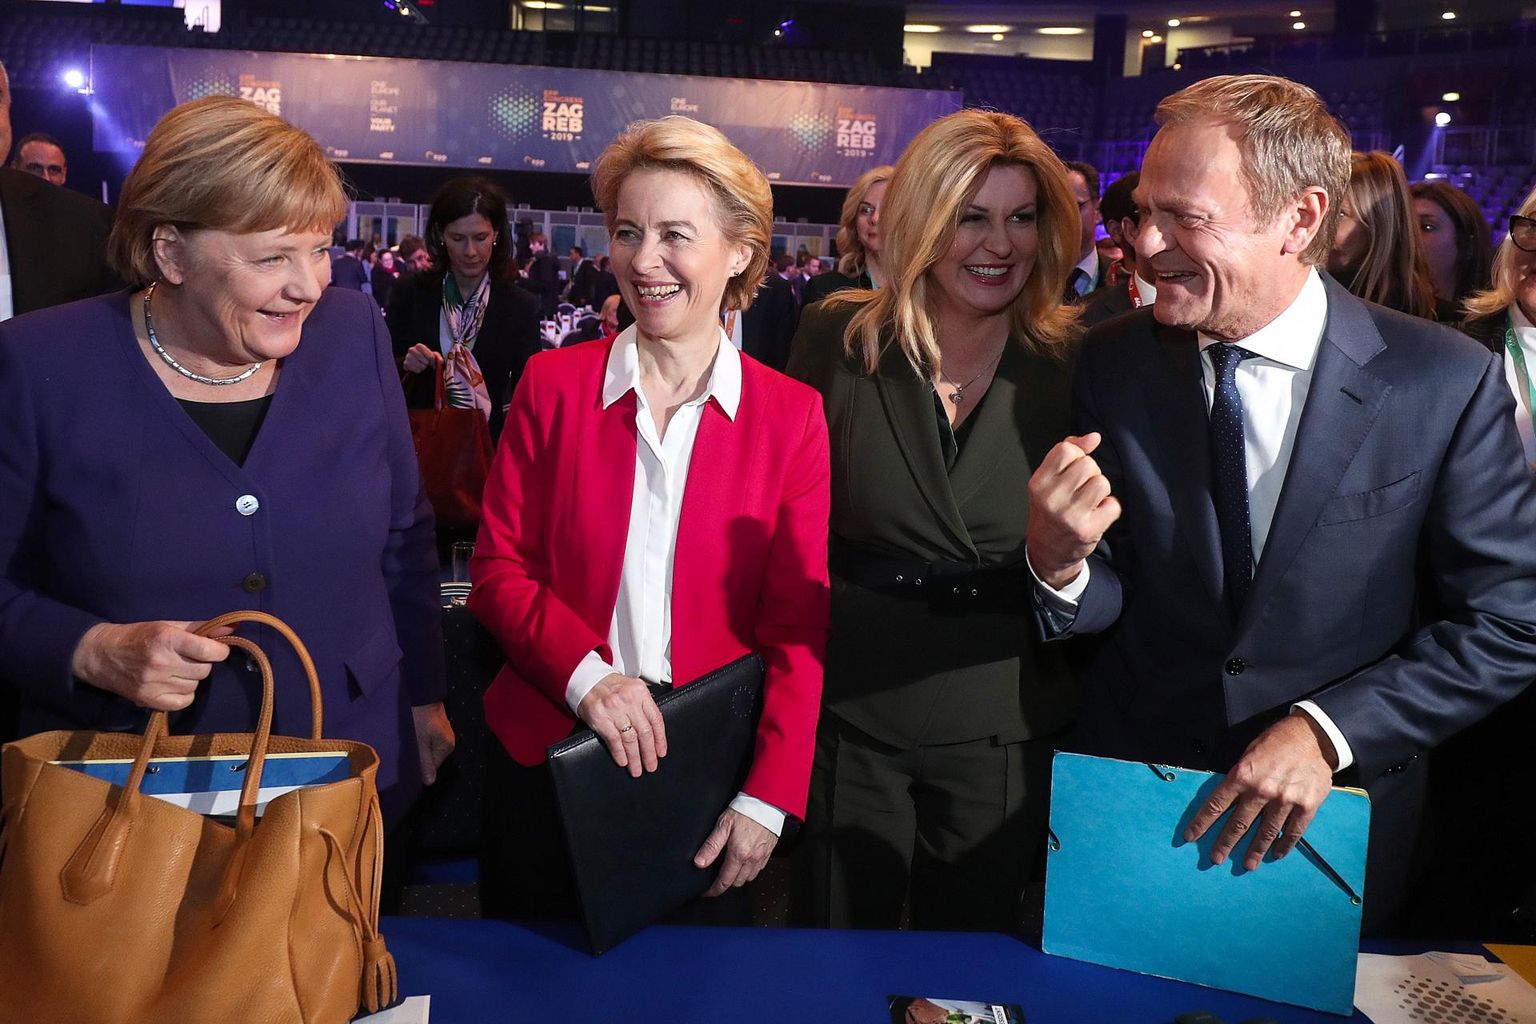 Paremtsenter Zagrebis: Saksa kantsler Angela Merkel, Euroopa Komisjoni uus juht Ursula von der Leyen, Horvaatia riigipea Kolinda Grabar-Kitarović ja EPP parteipere uus juht Donald Tusk.